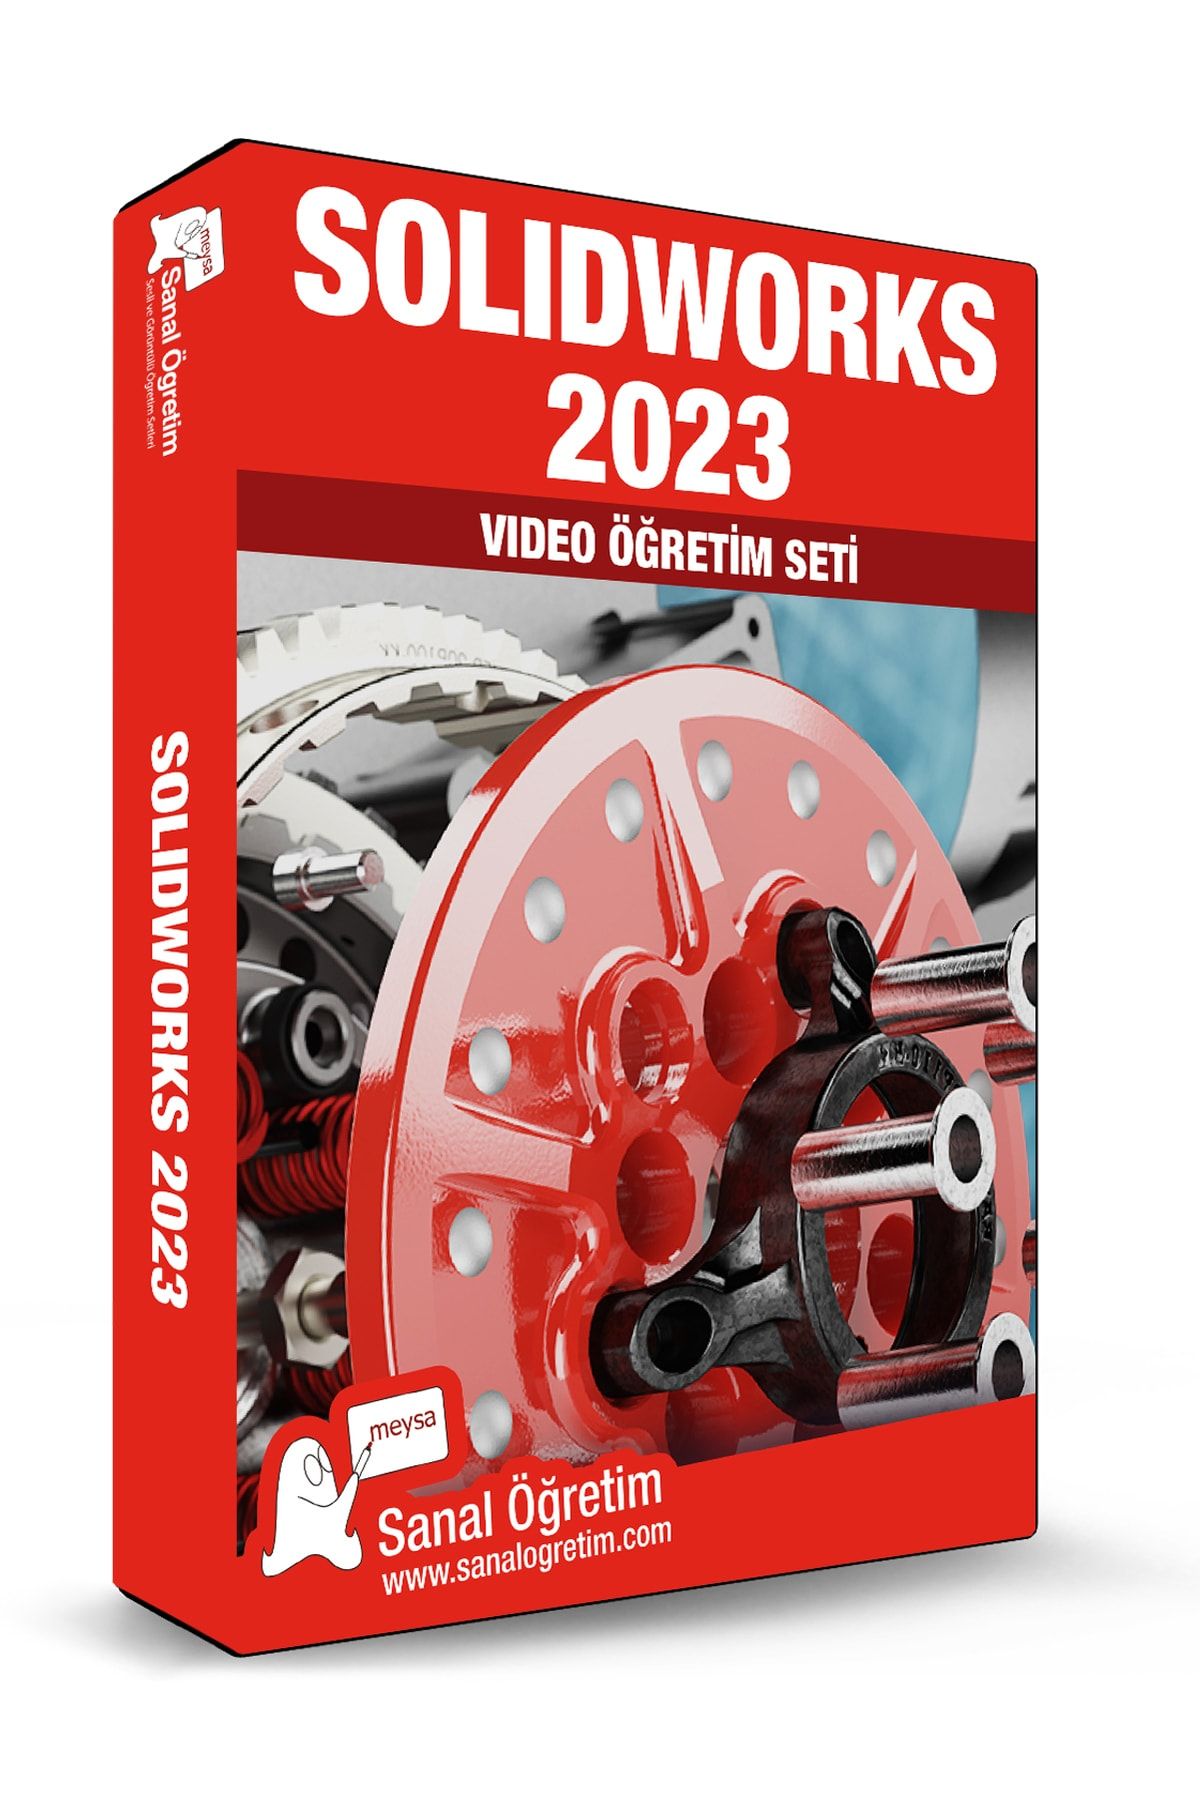 Sanal Öğretim Solidworks 2023 Video Ders Eğitim Seti